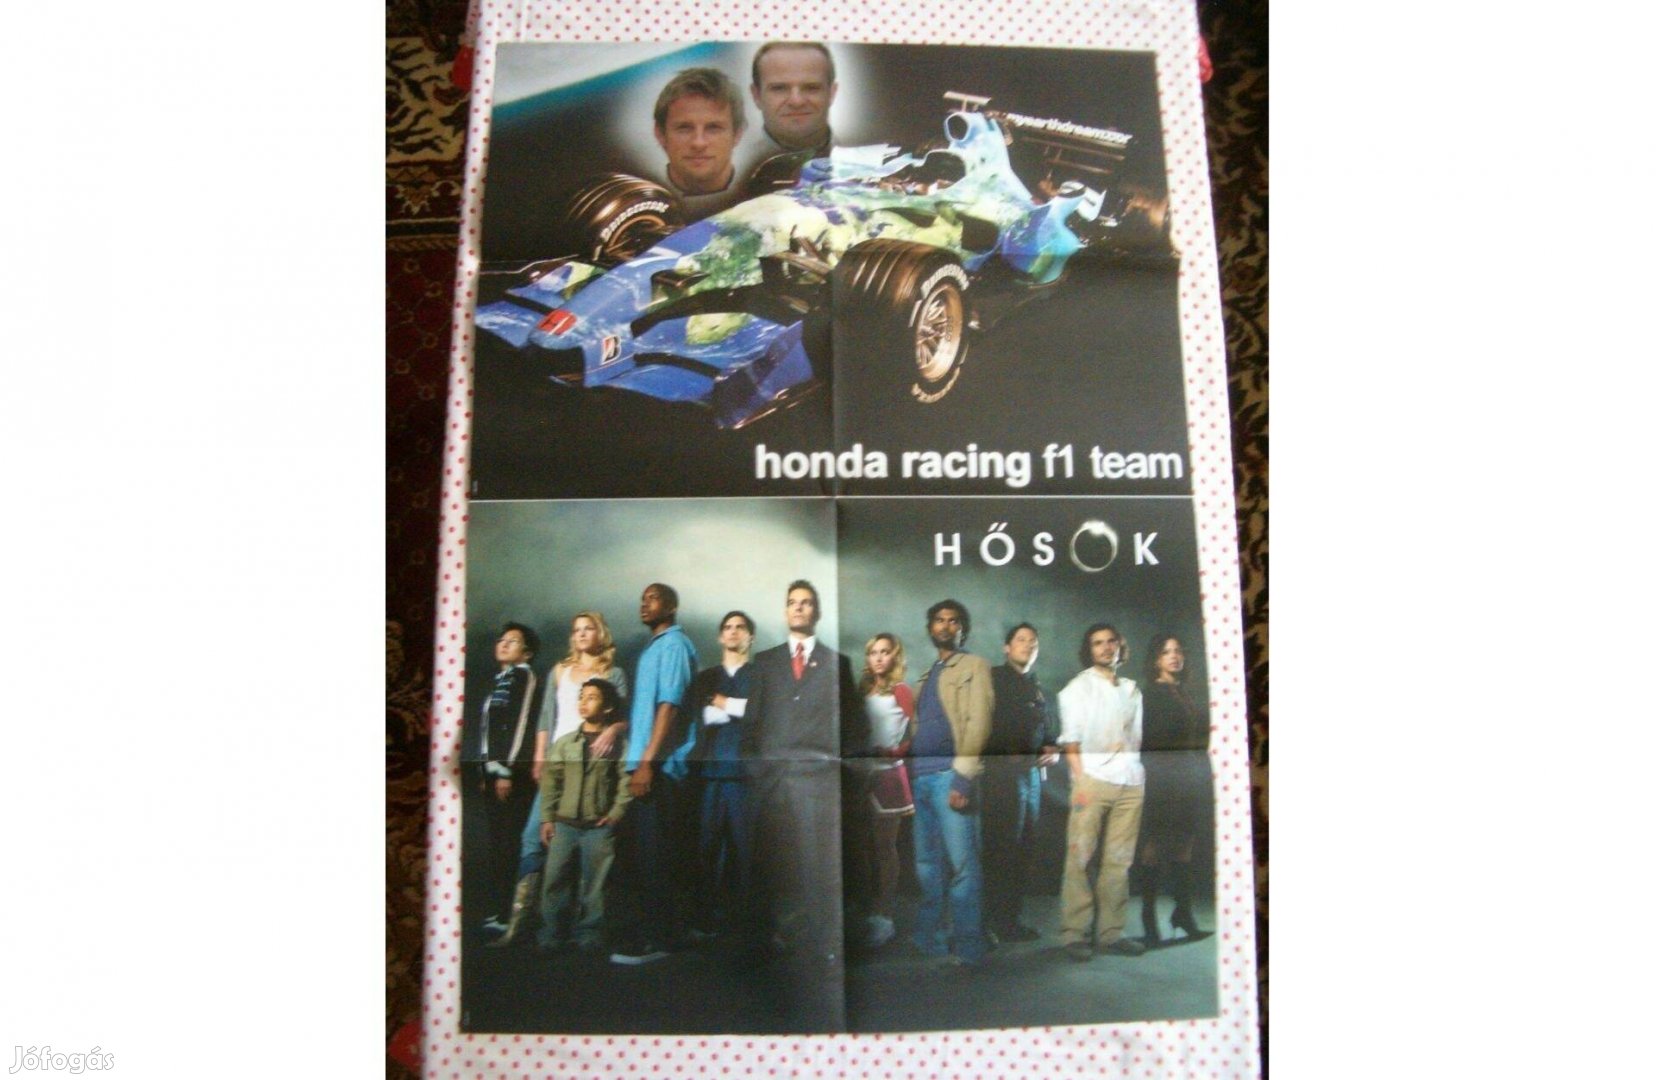 F1, Barrichello, Button, + Heroes, újszerű plakát, poszter